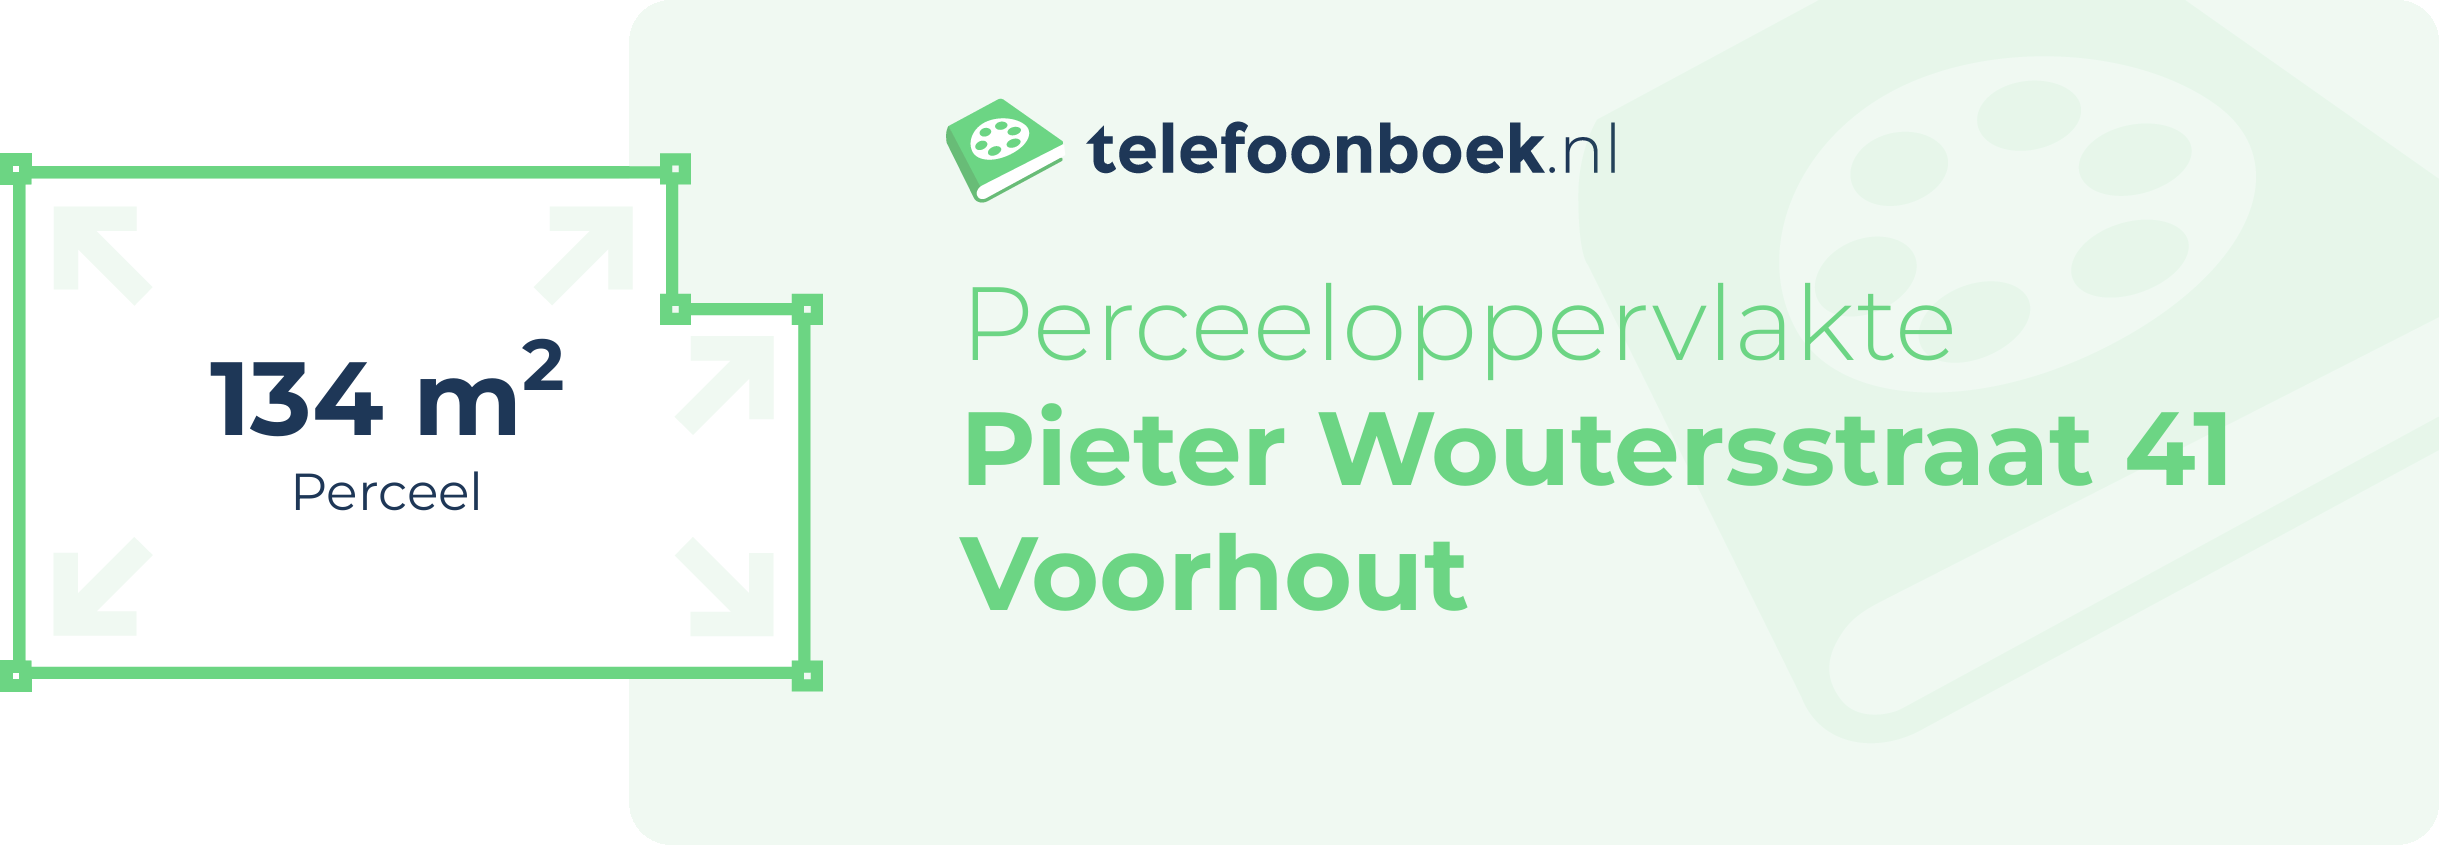 Perceeloppervlakte Pieter Woutersstraat 41 Voorhout